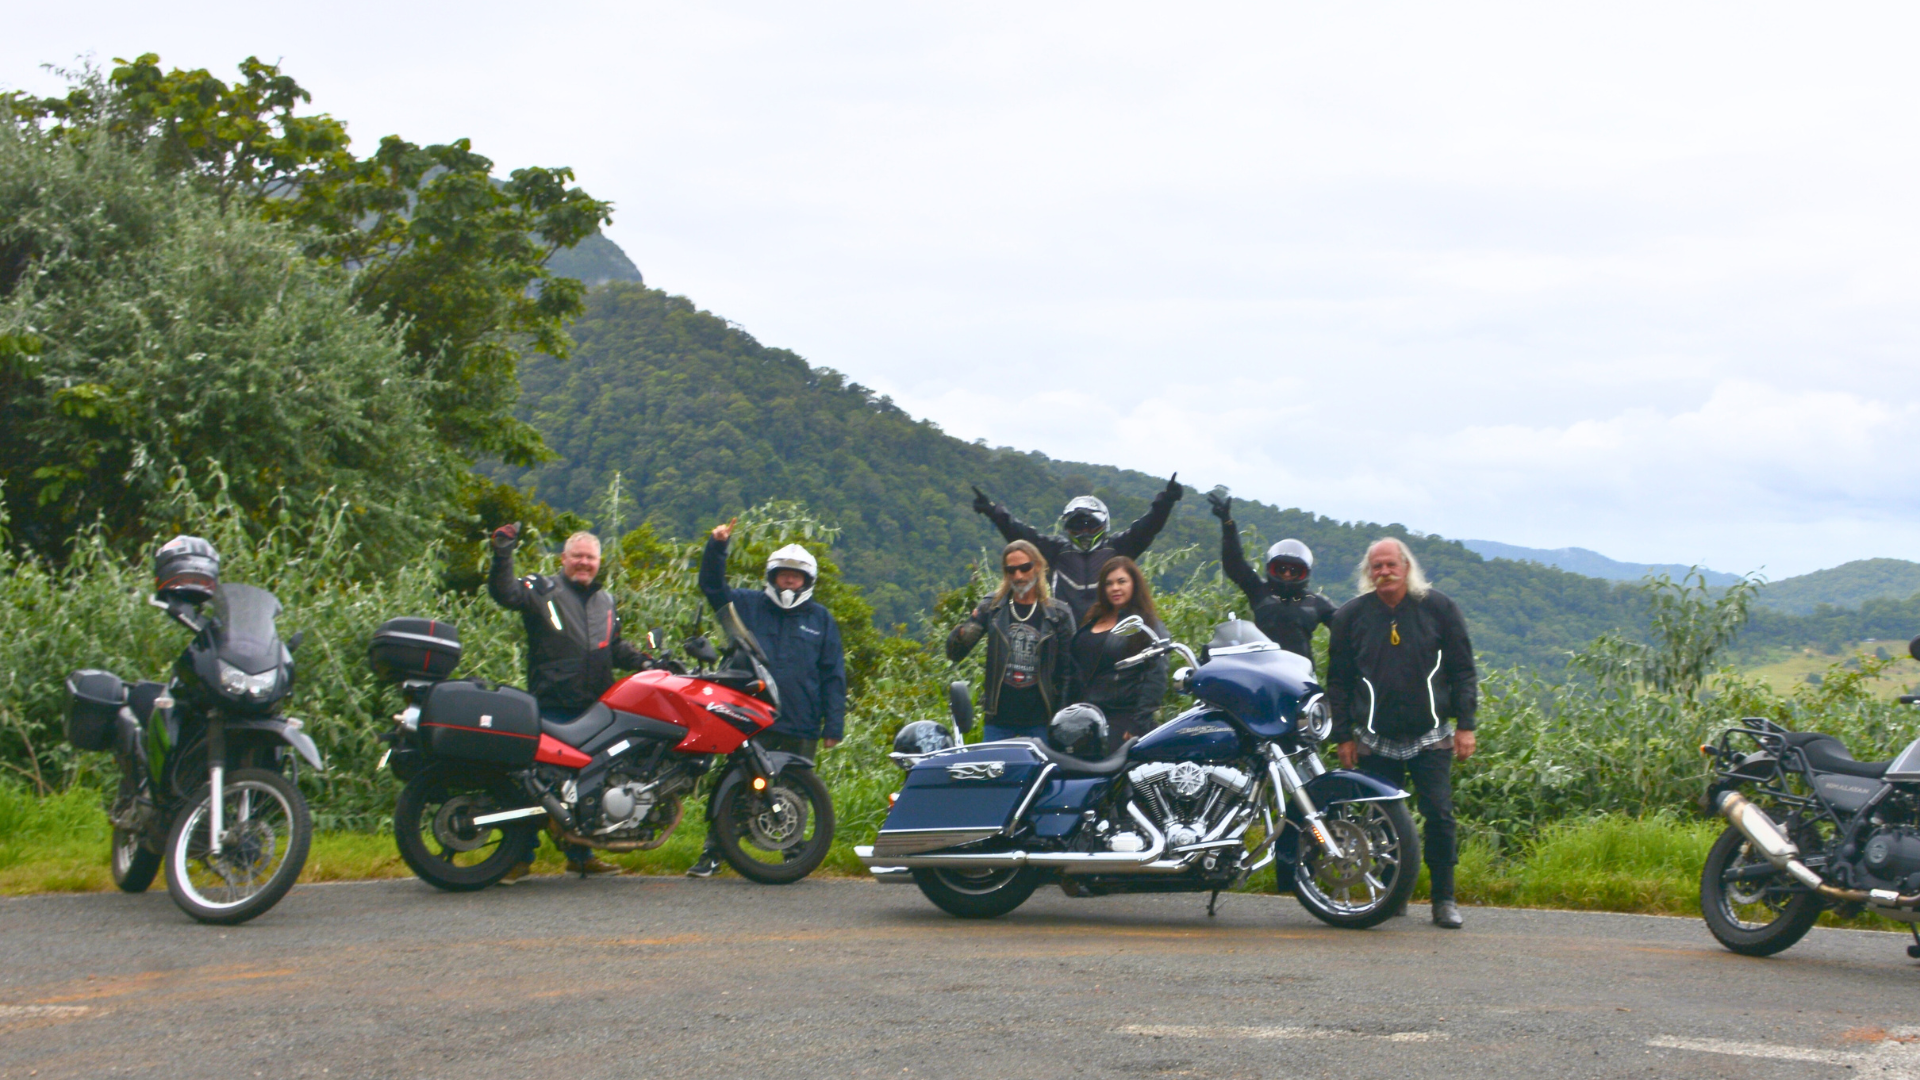 Motorcycle Tour of Numinbah Valley & Natural Bridge